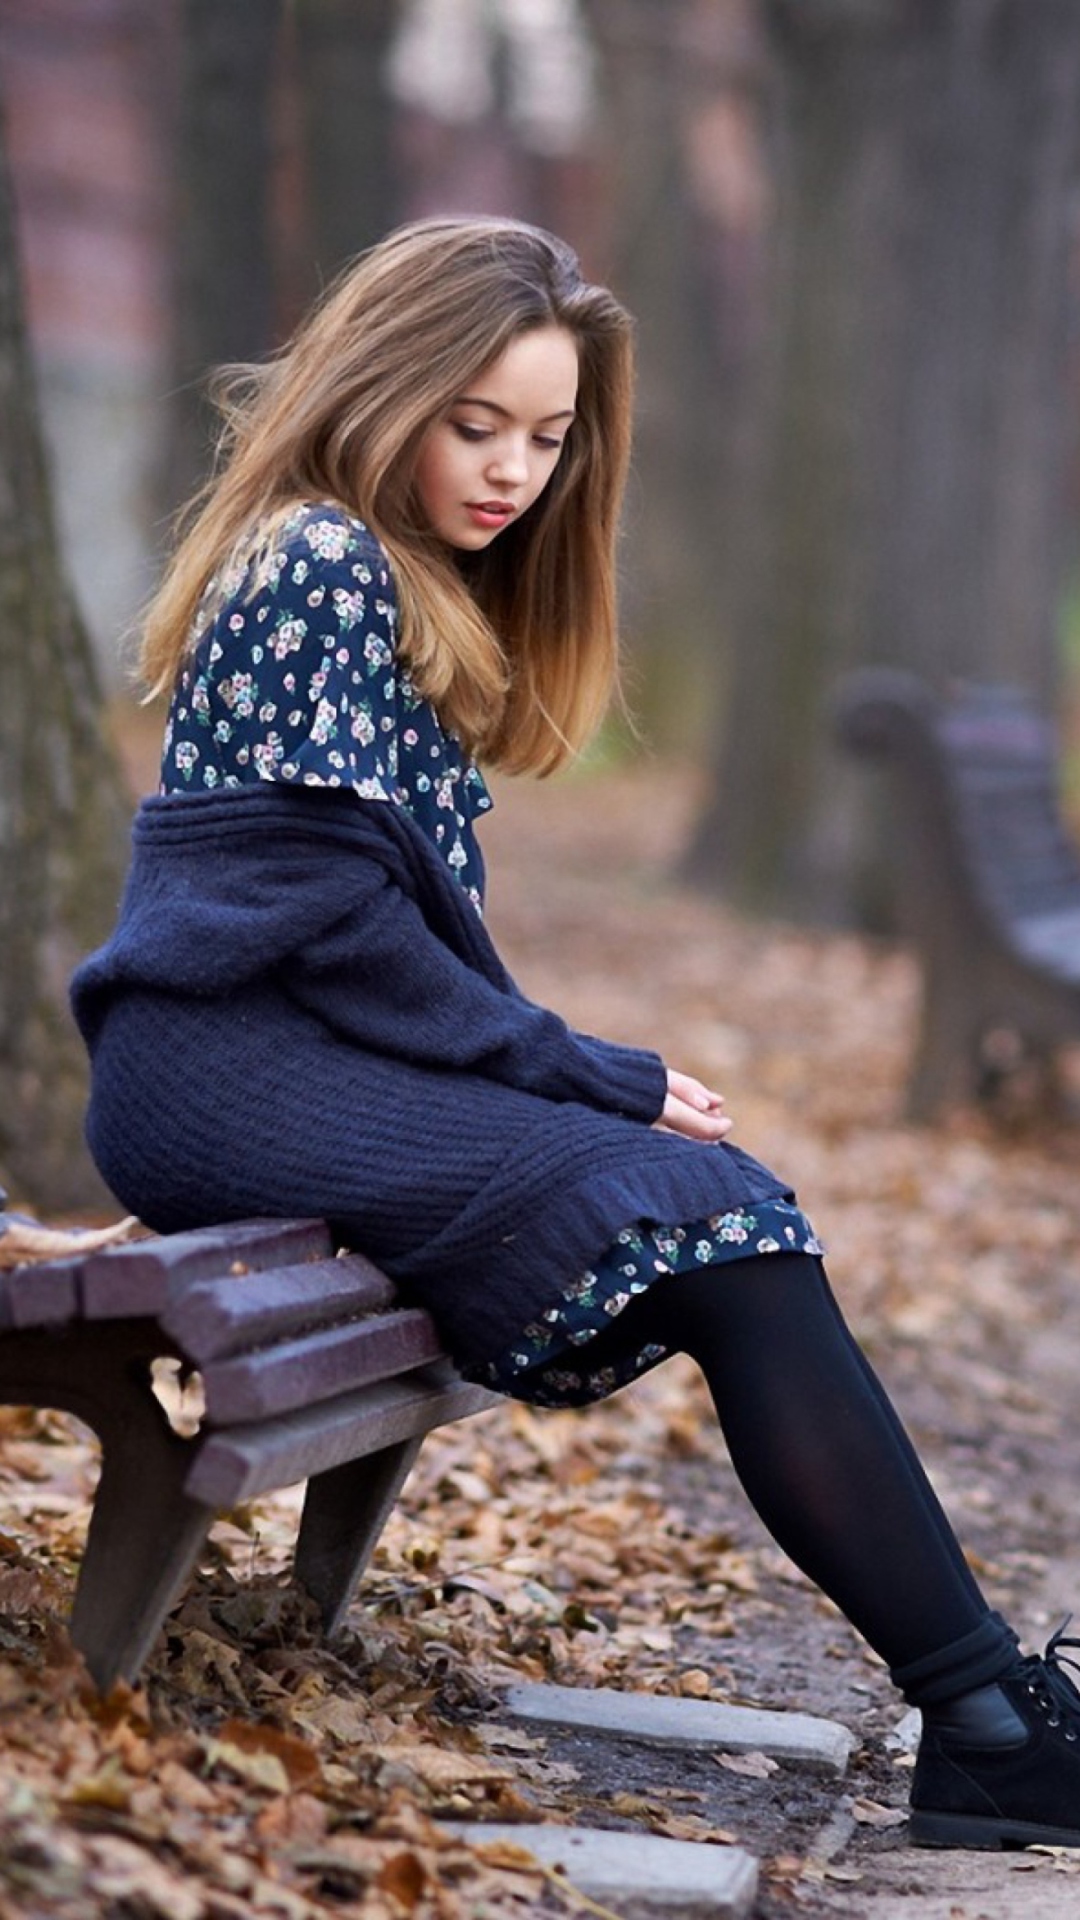 фото девушек на скамейке в парке